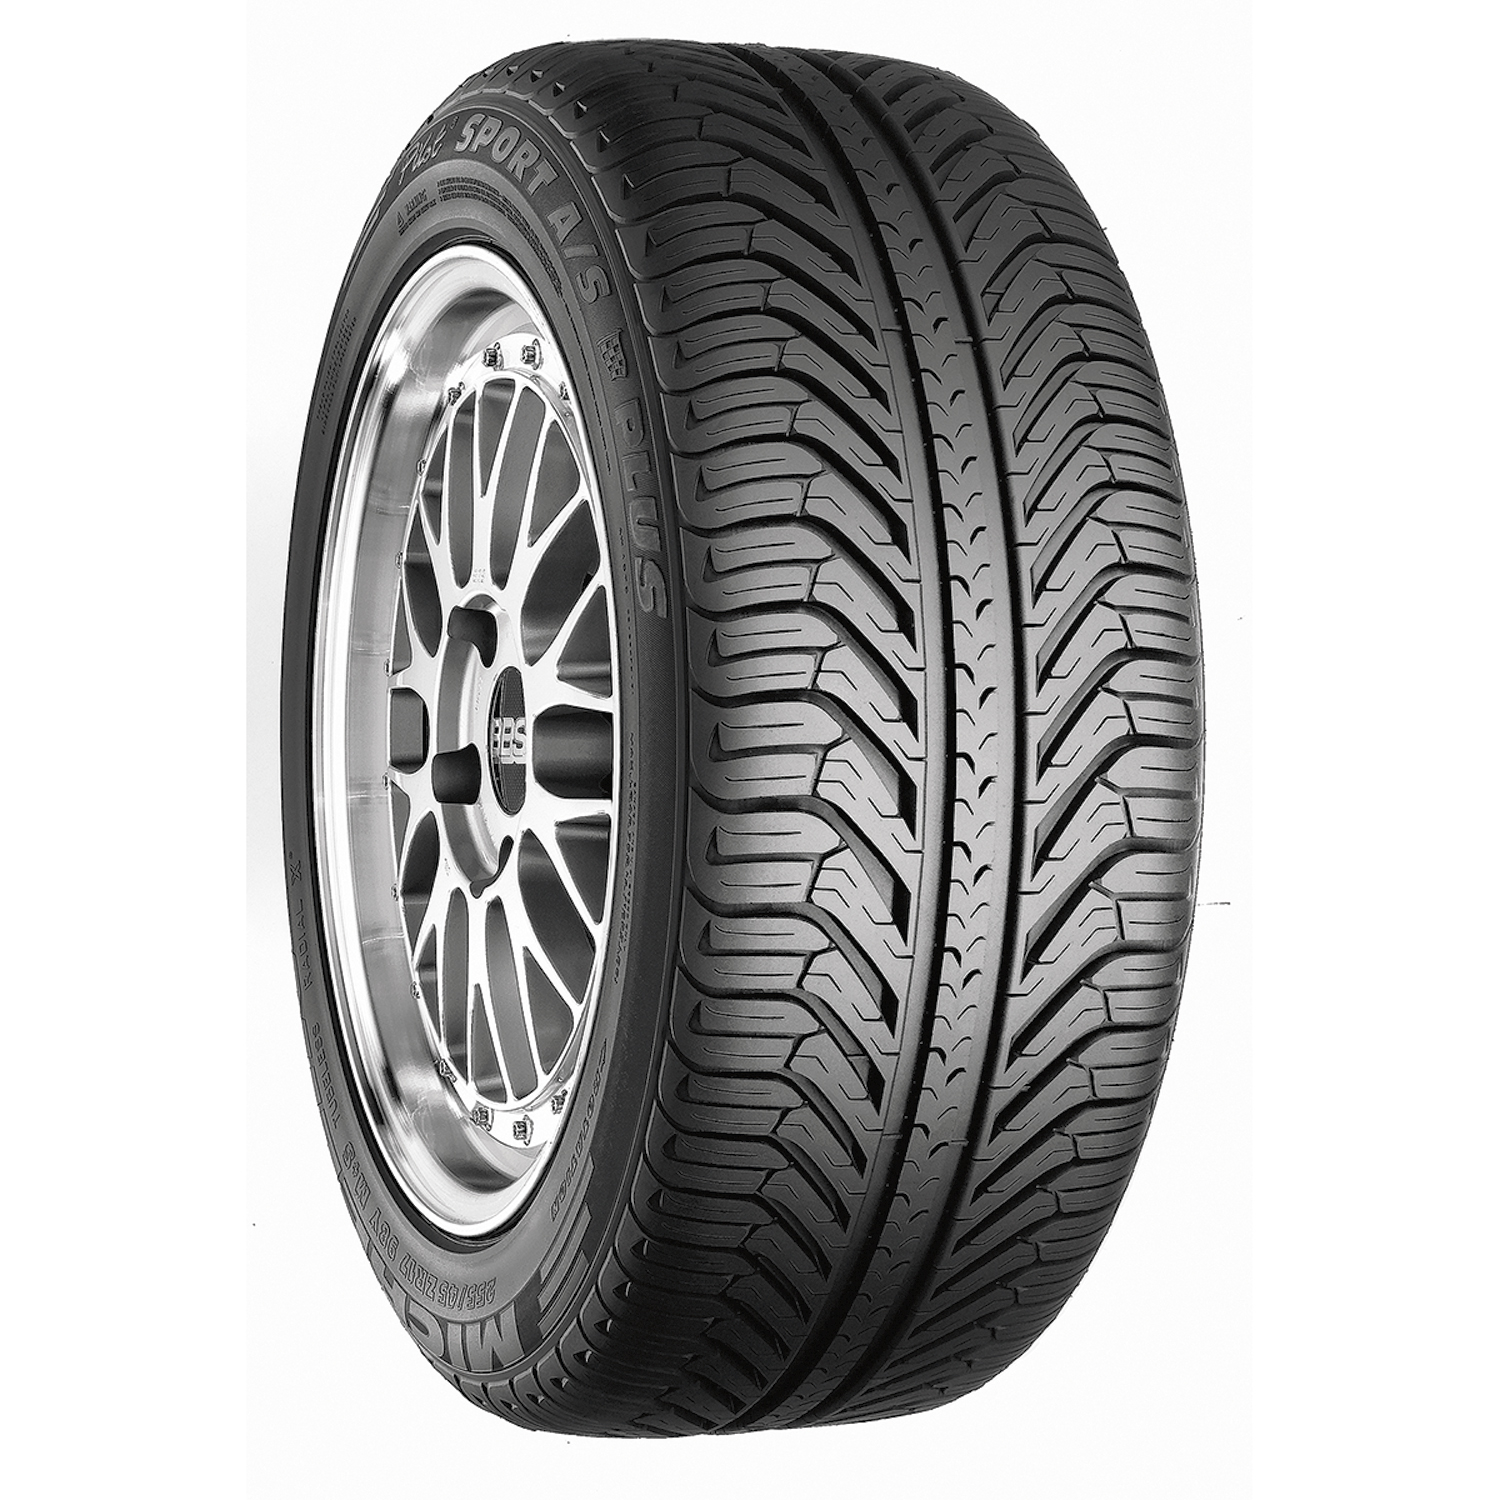 Michelin Pilot Sport A/S Plus - 215/45R17XL 91W BSW - All Season Tire